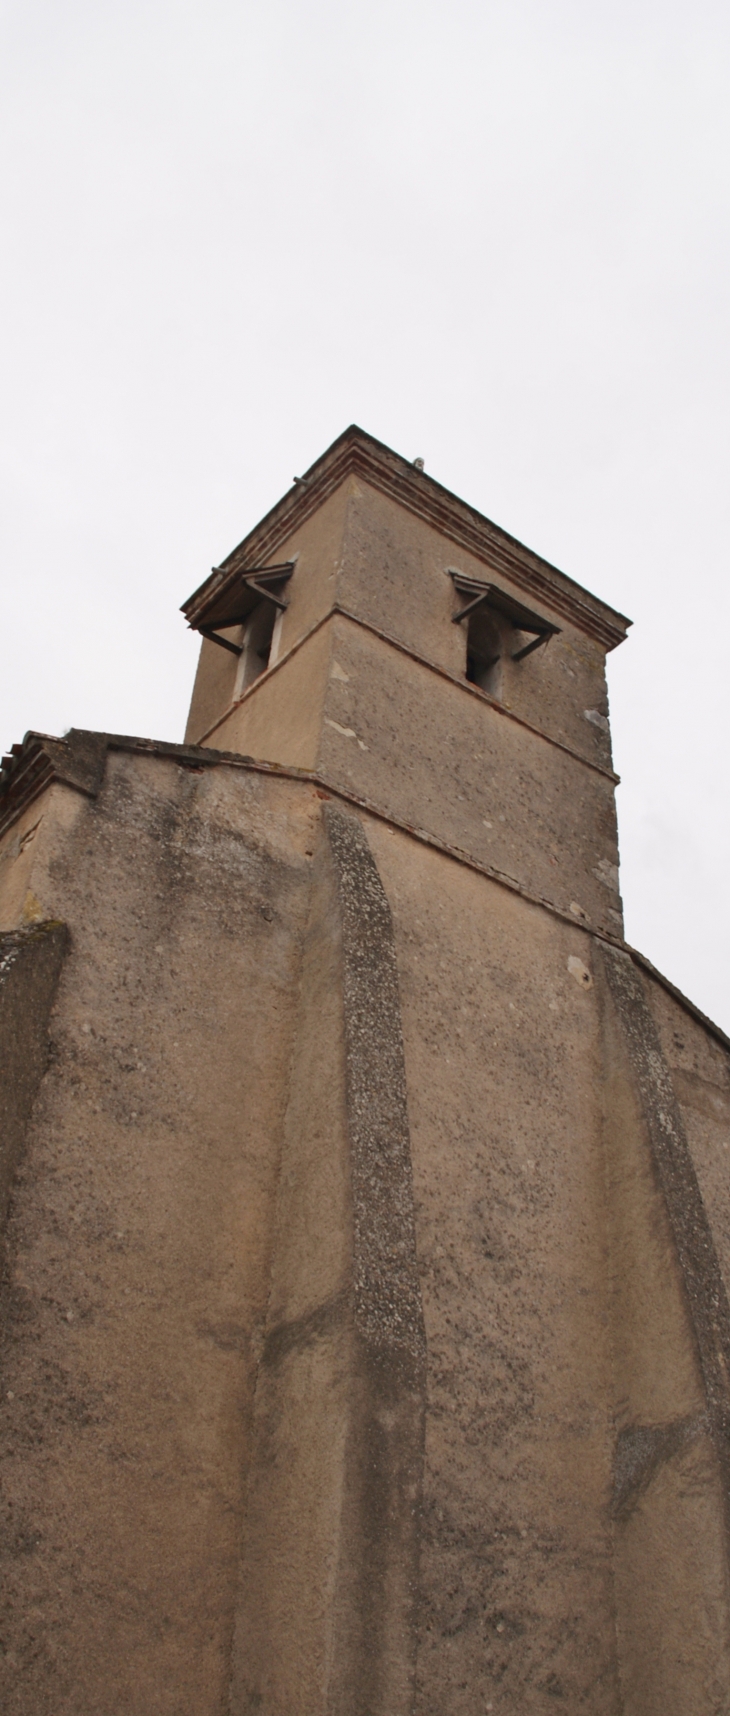 ...Eglise Saint-Géraud - Sieurac